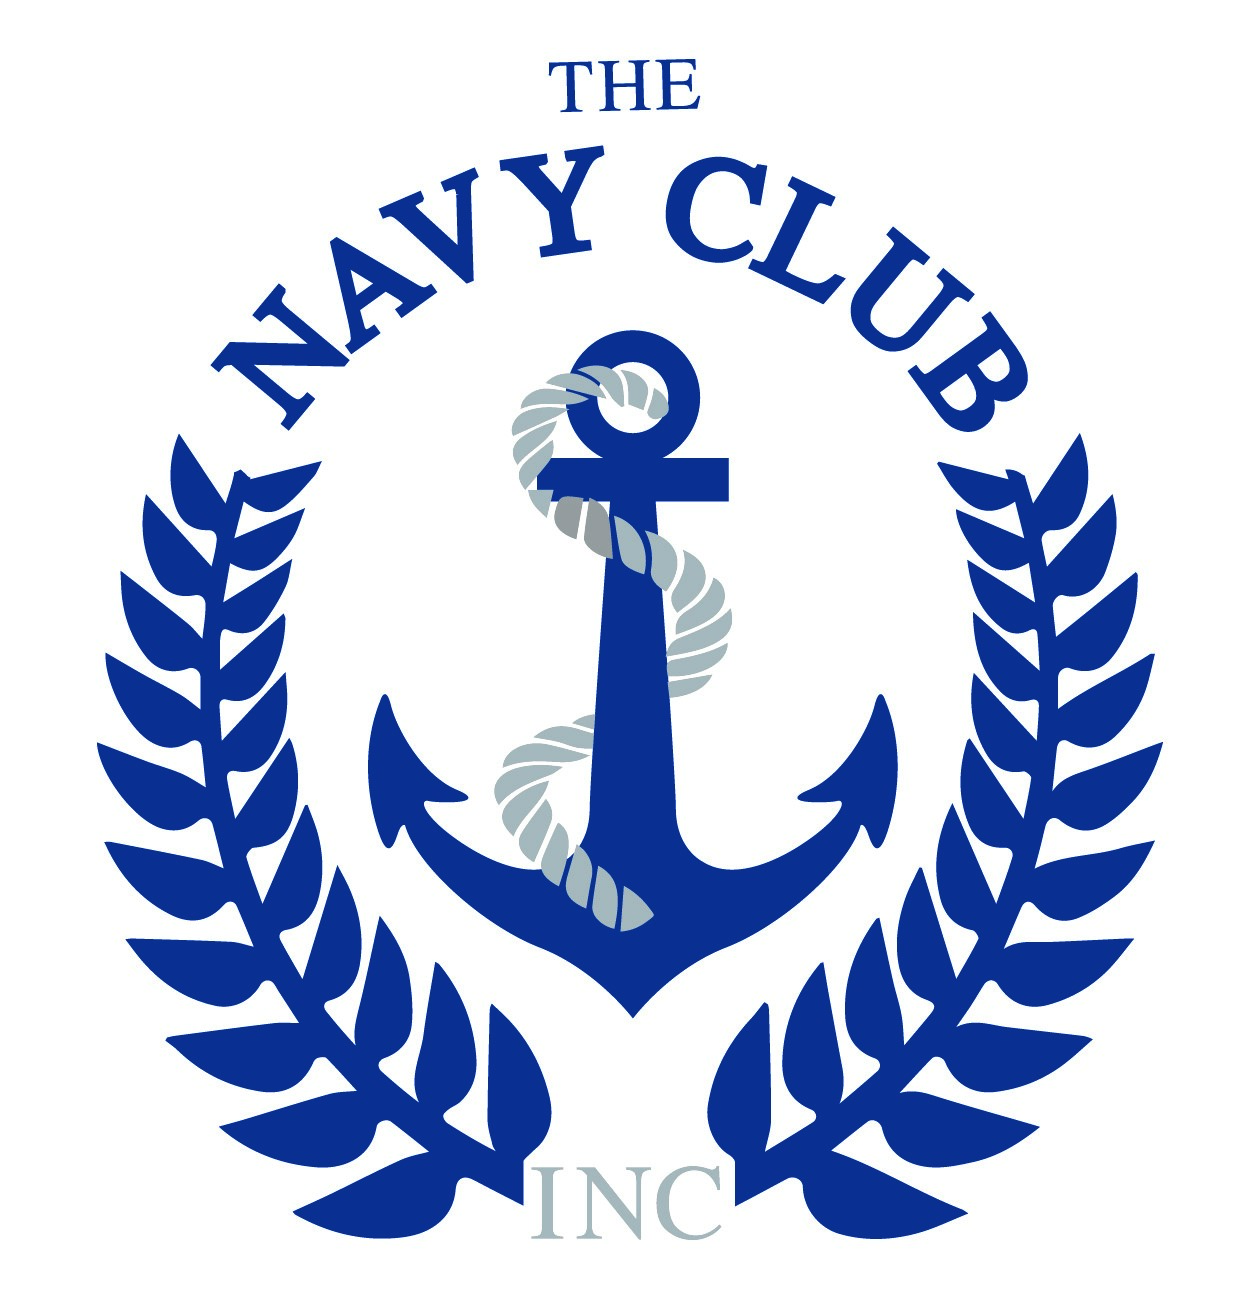 The Navy Club